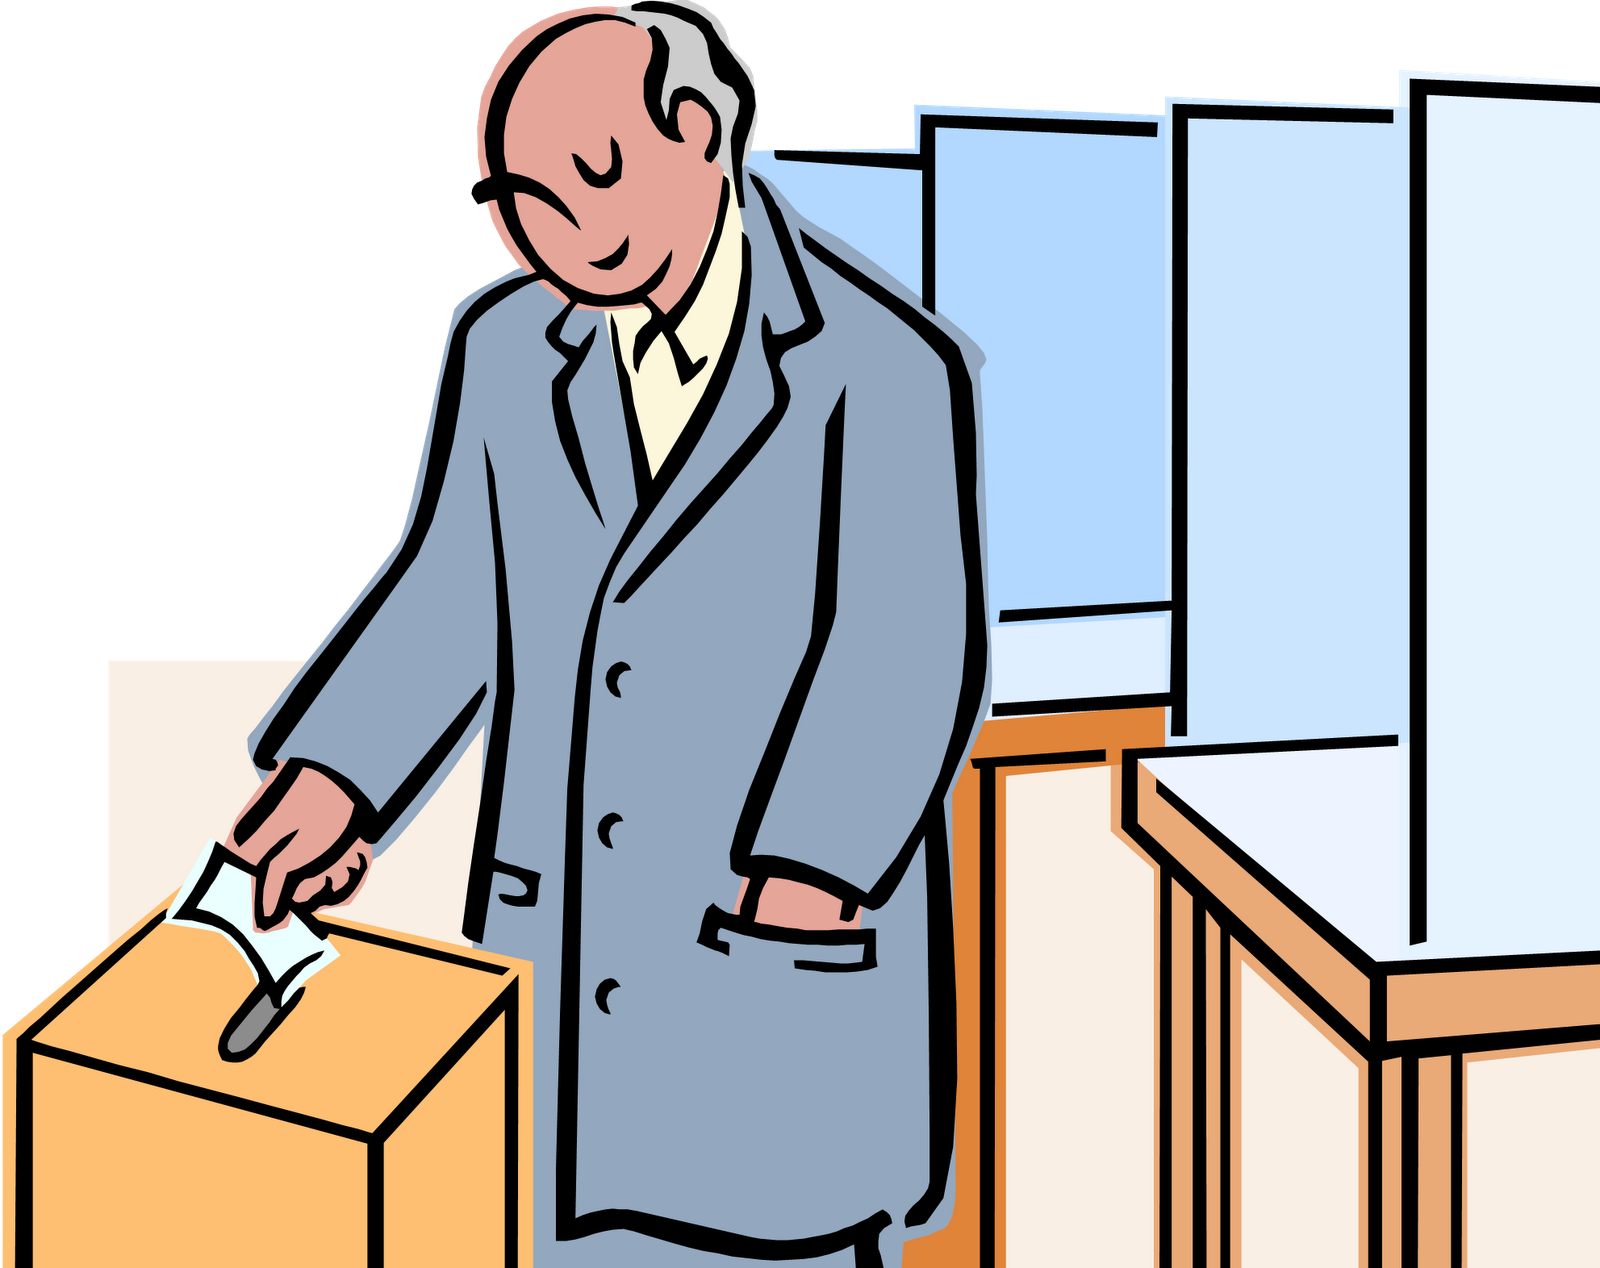 Sondaj – Alegeri Prezidentiale 2014